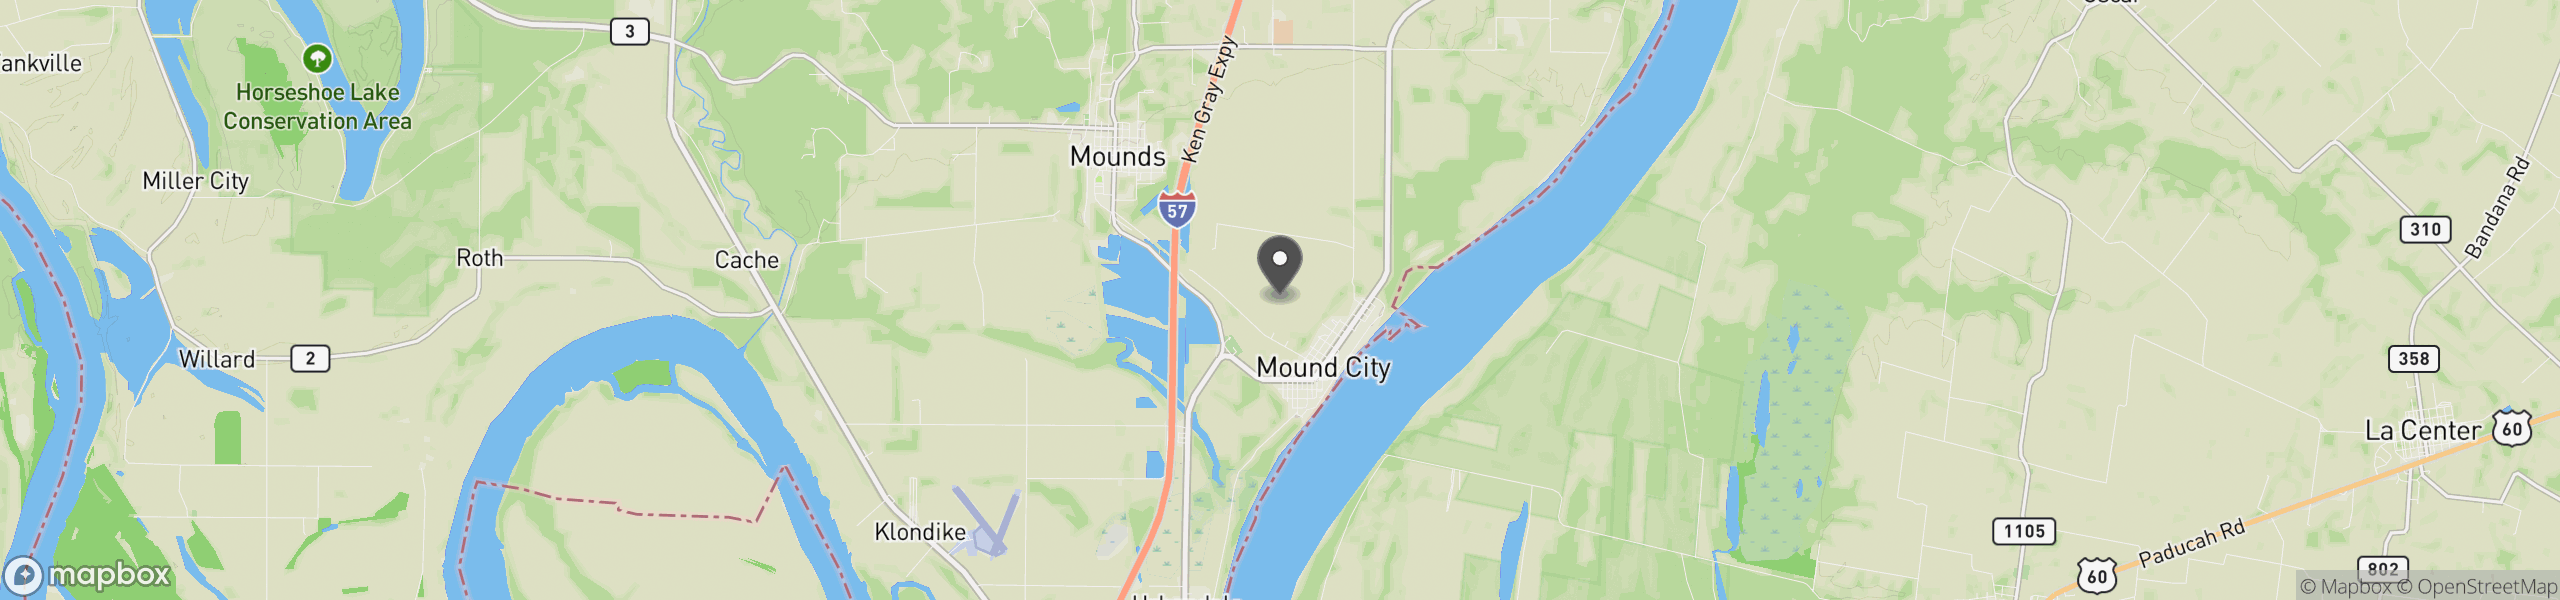 Mound City, IL